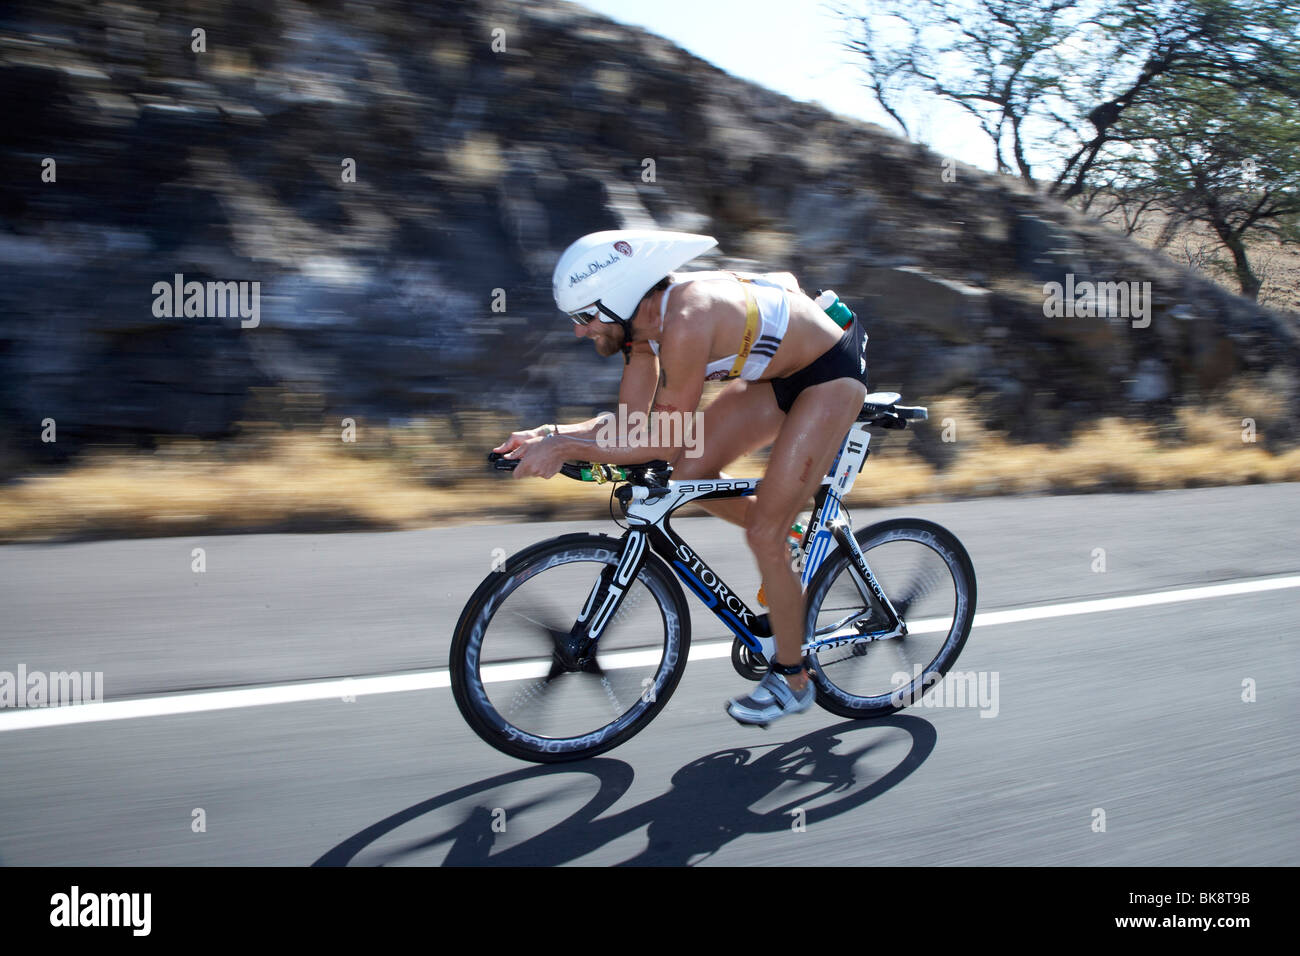 The German professional triathlete Faris Al-Sultan on the bike course of Ironman Triathlon World Championship in Kailua-Kona, H Stock Photo